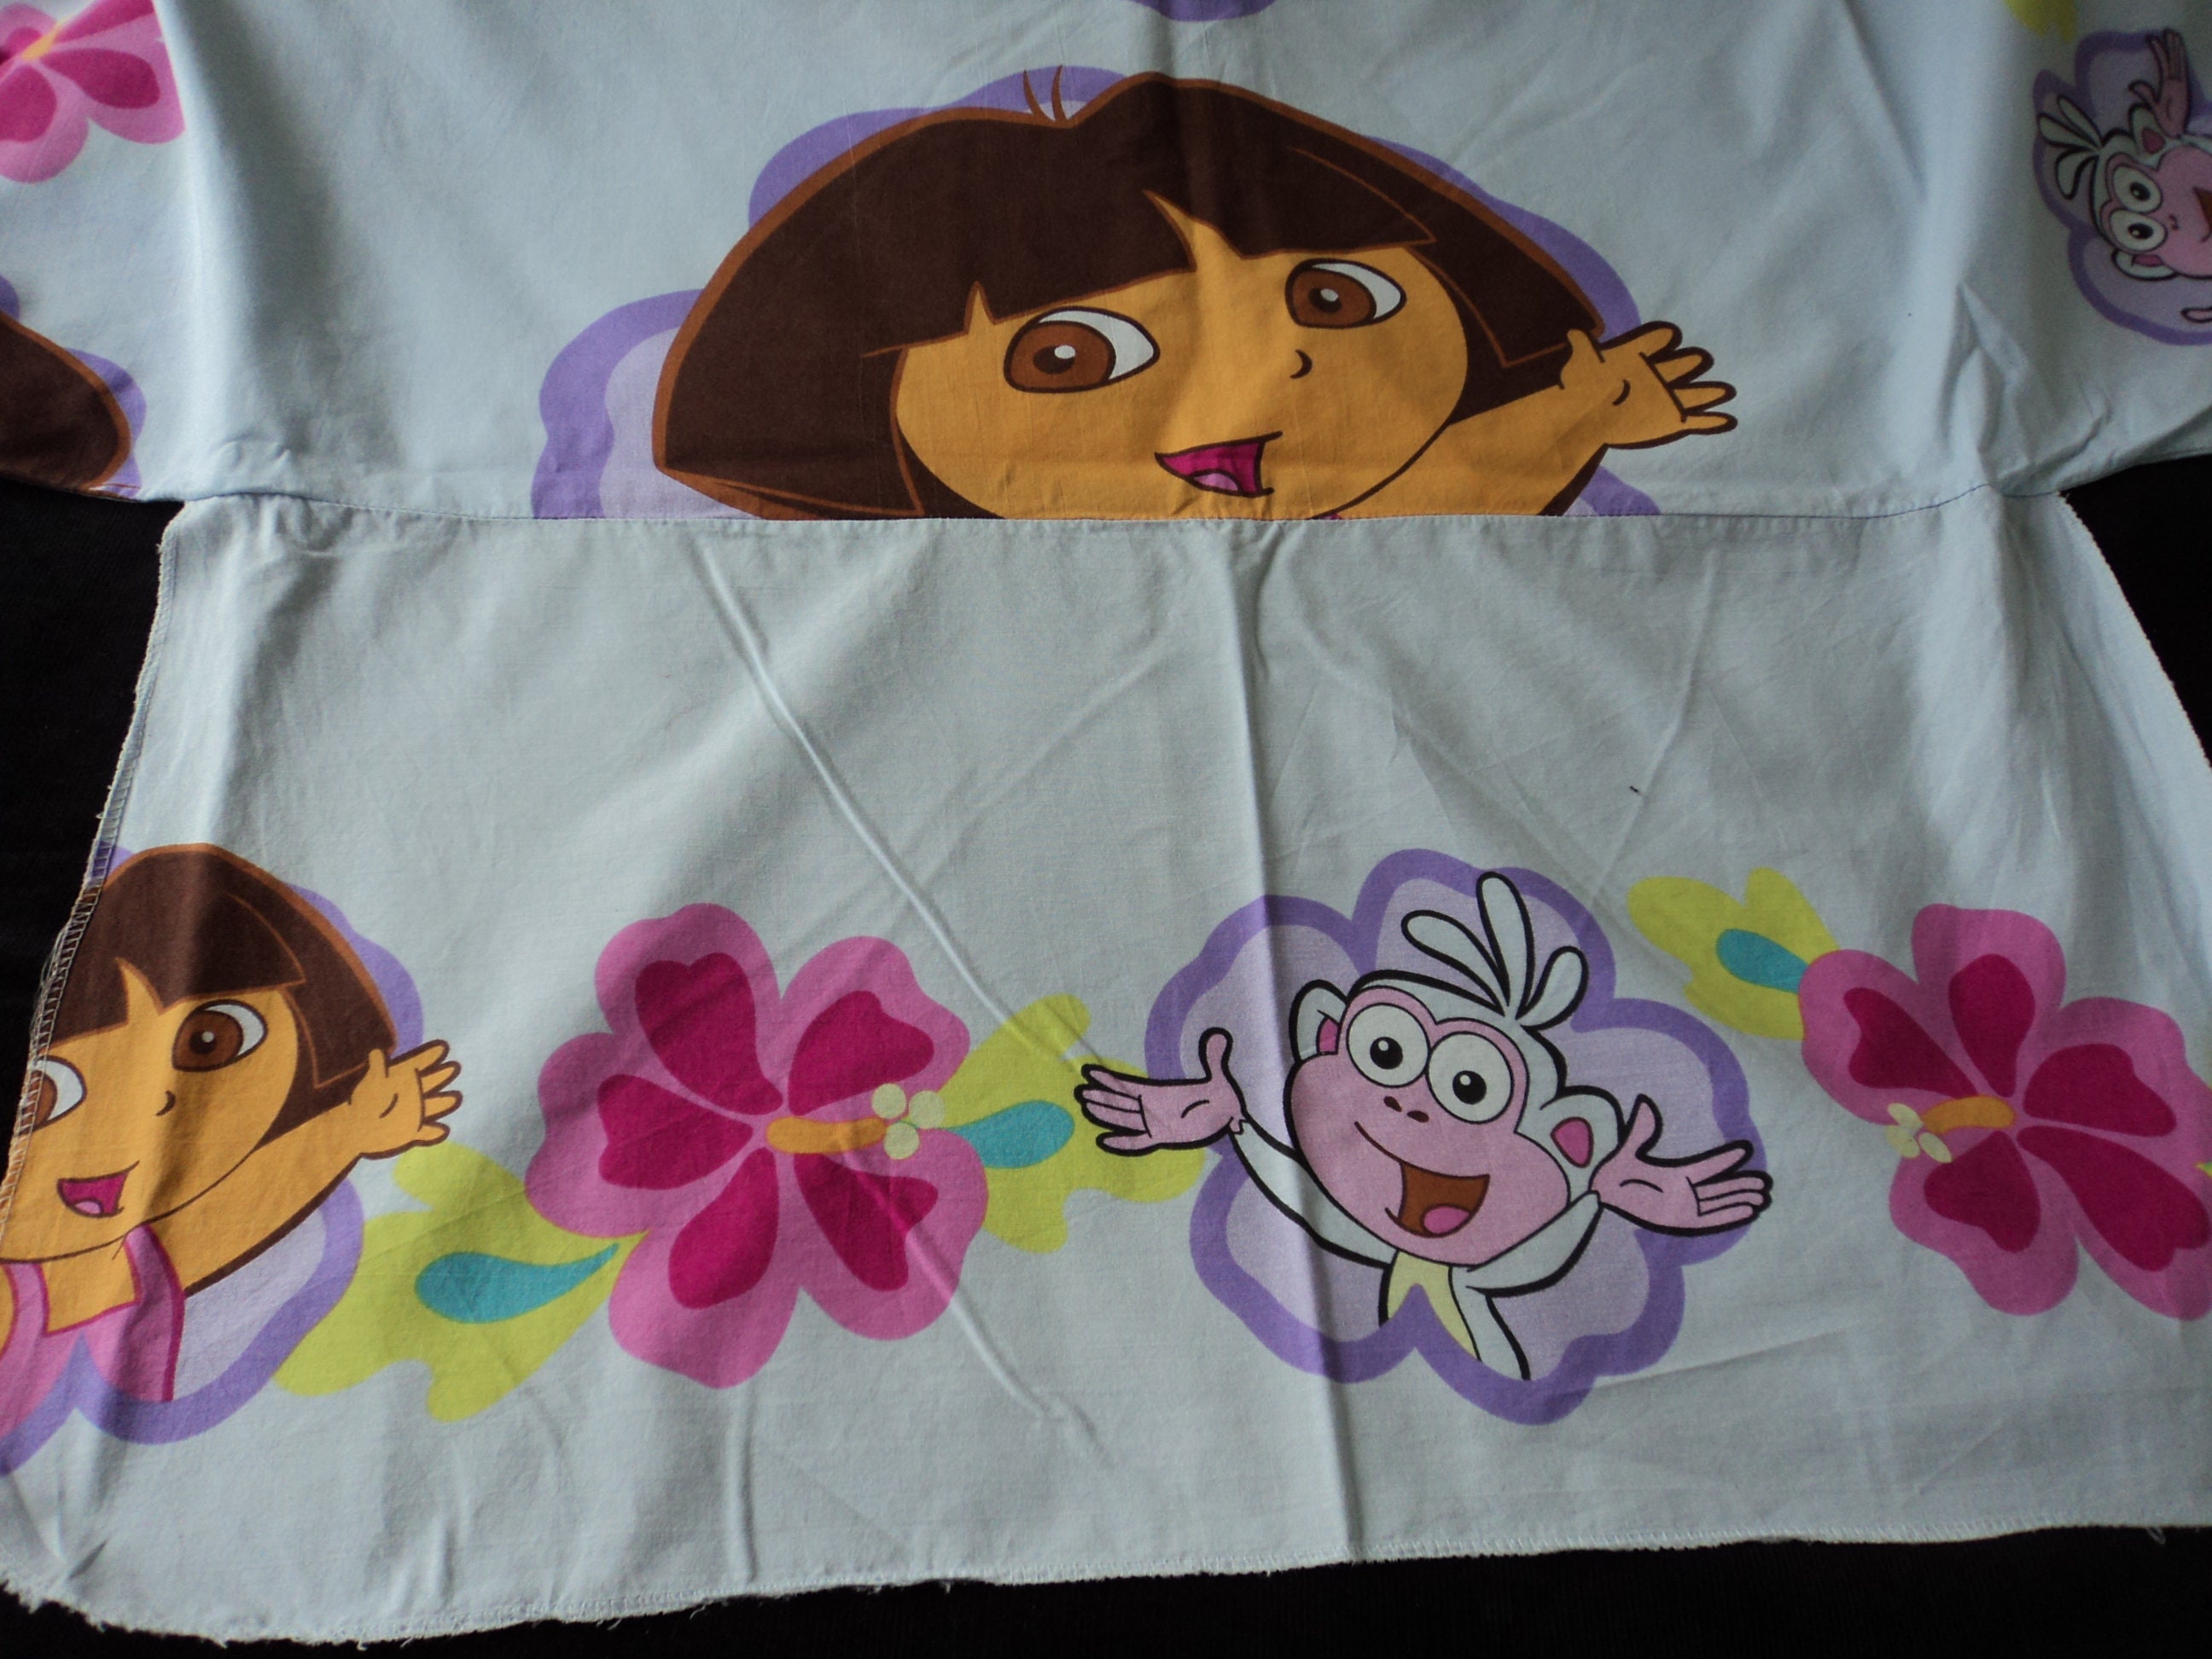 Dora The Explorer Duvet Covers for Sale - Pixels